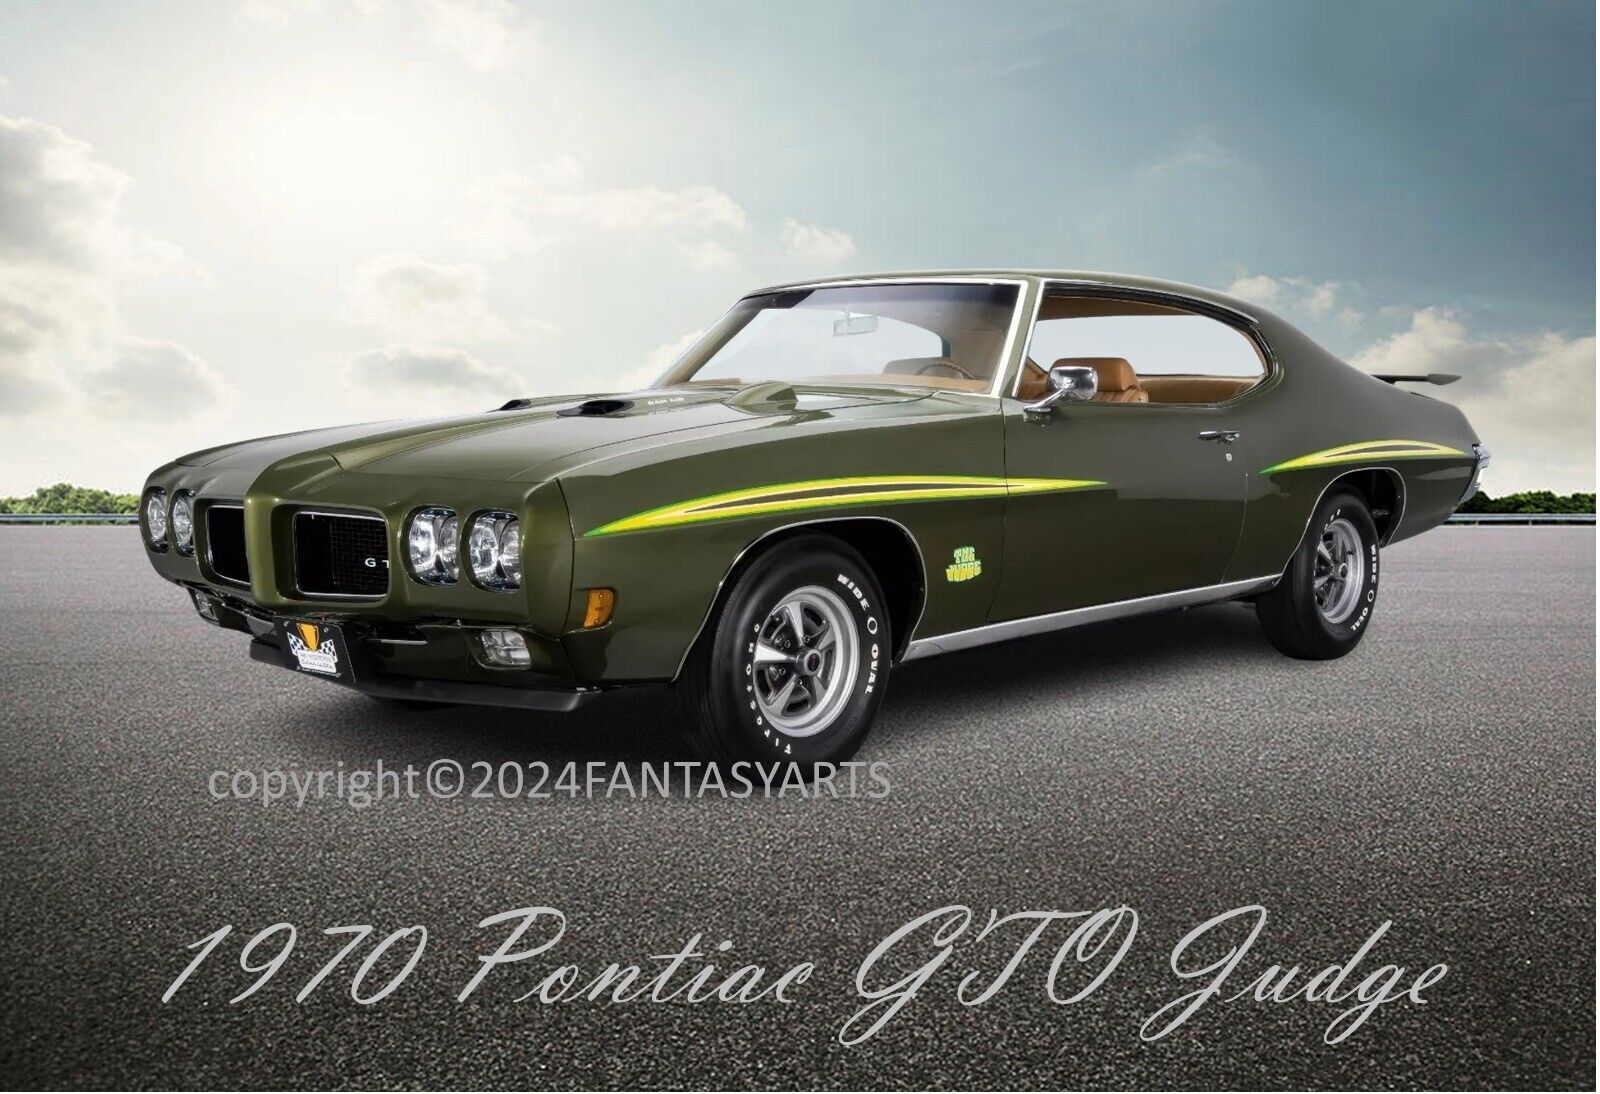 1970 Pontiac GTO Judge Green Large Poster Sized Glossy Photo Print 11\